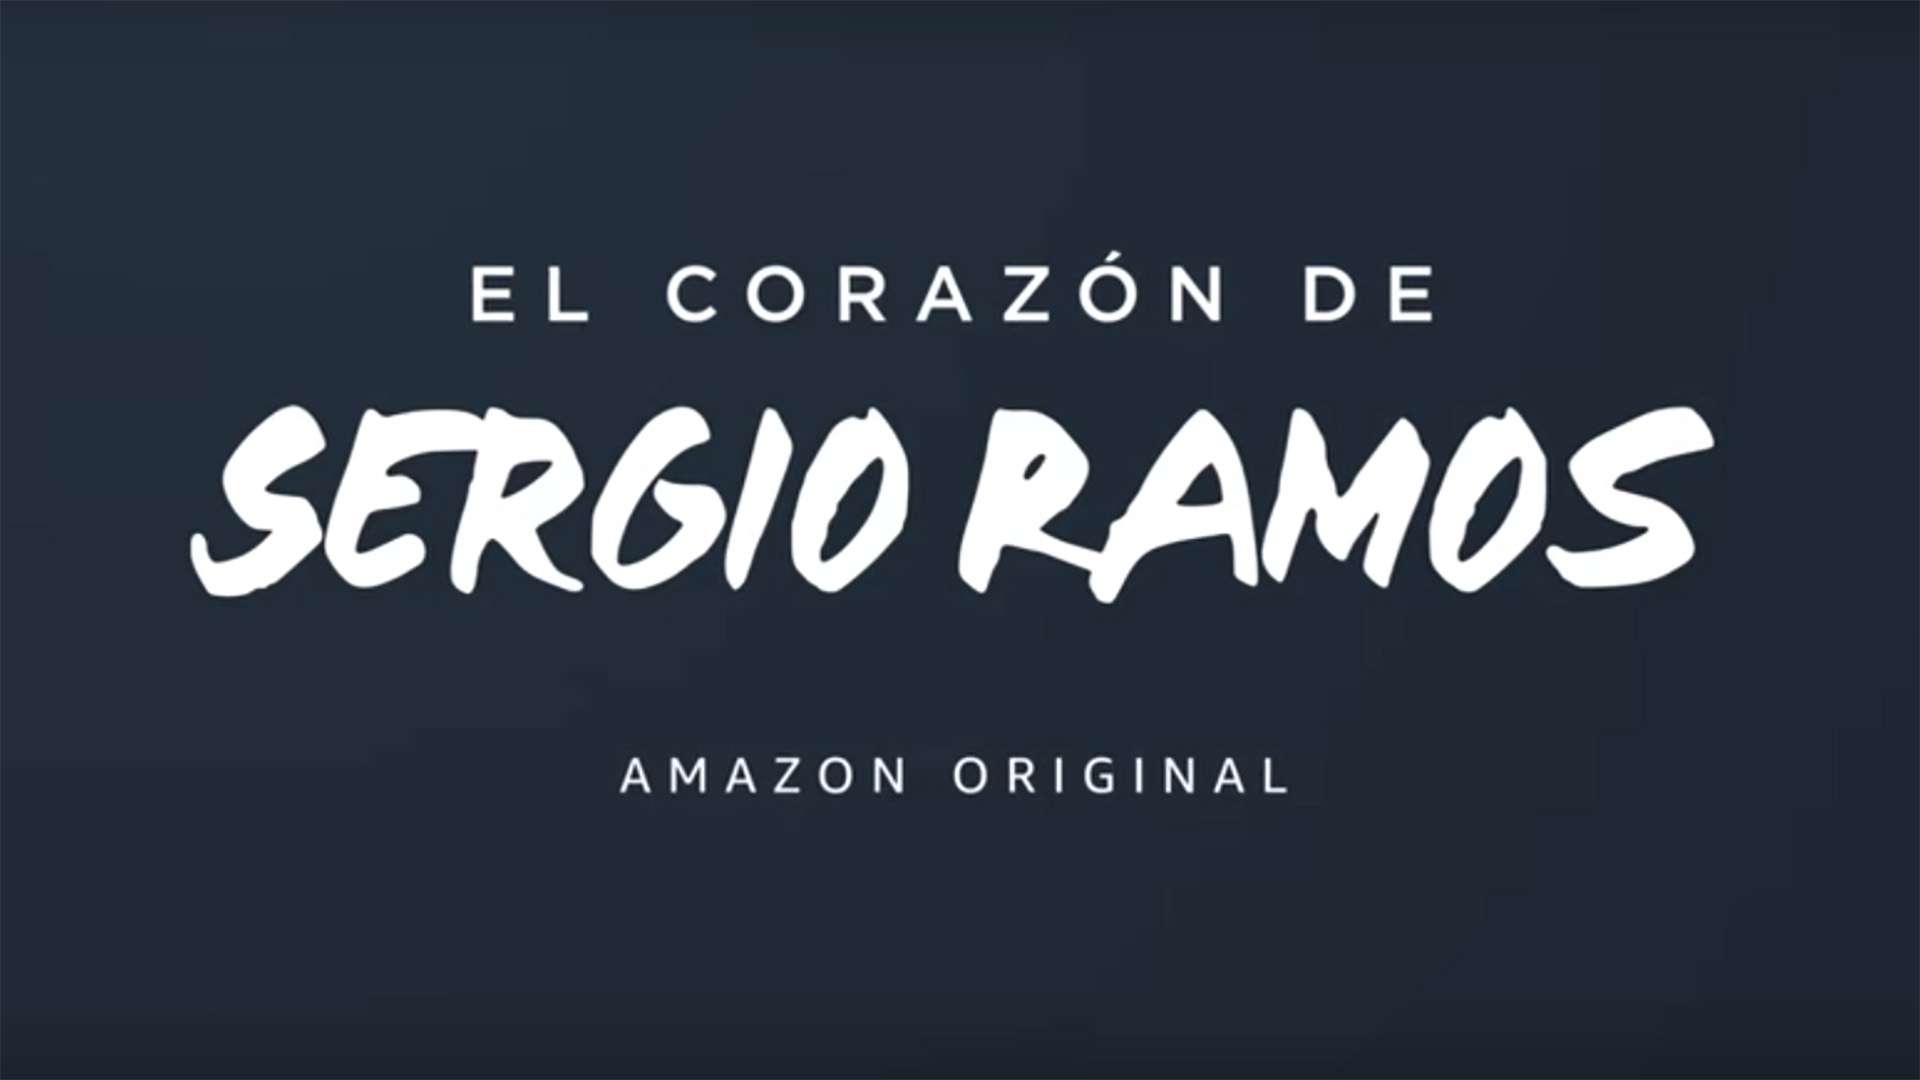 Sergio Ramos Amazon documentary